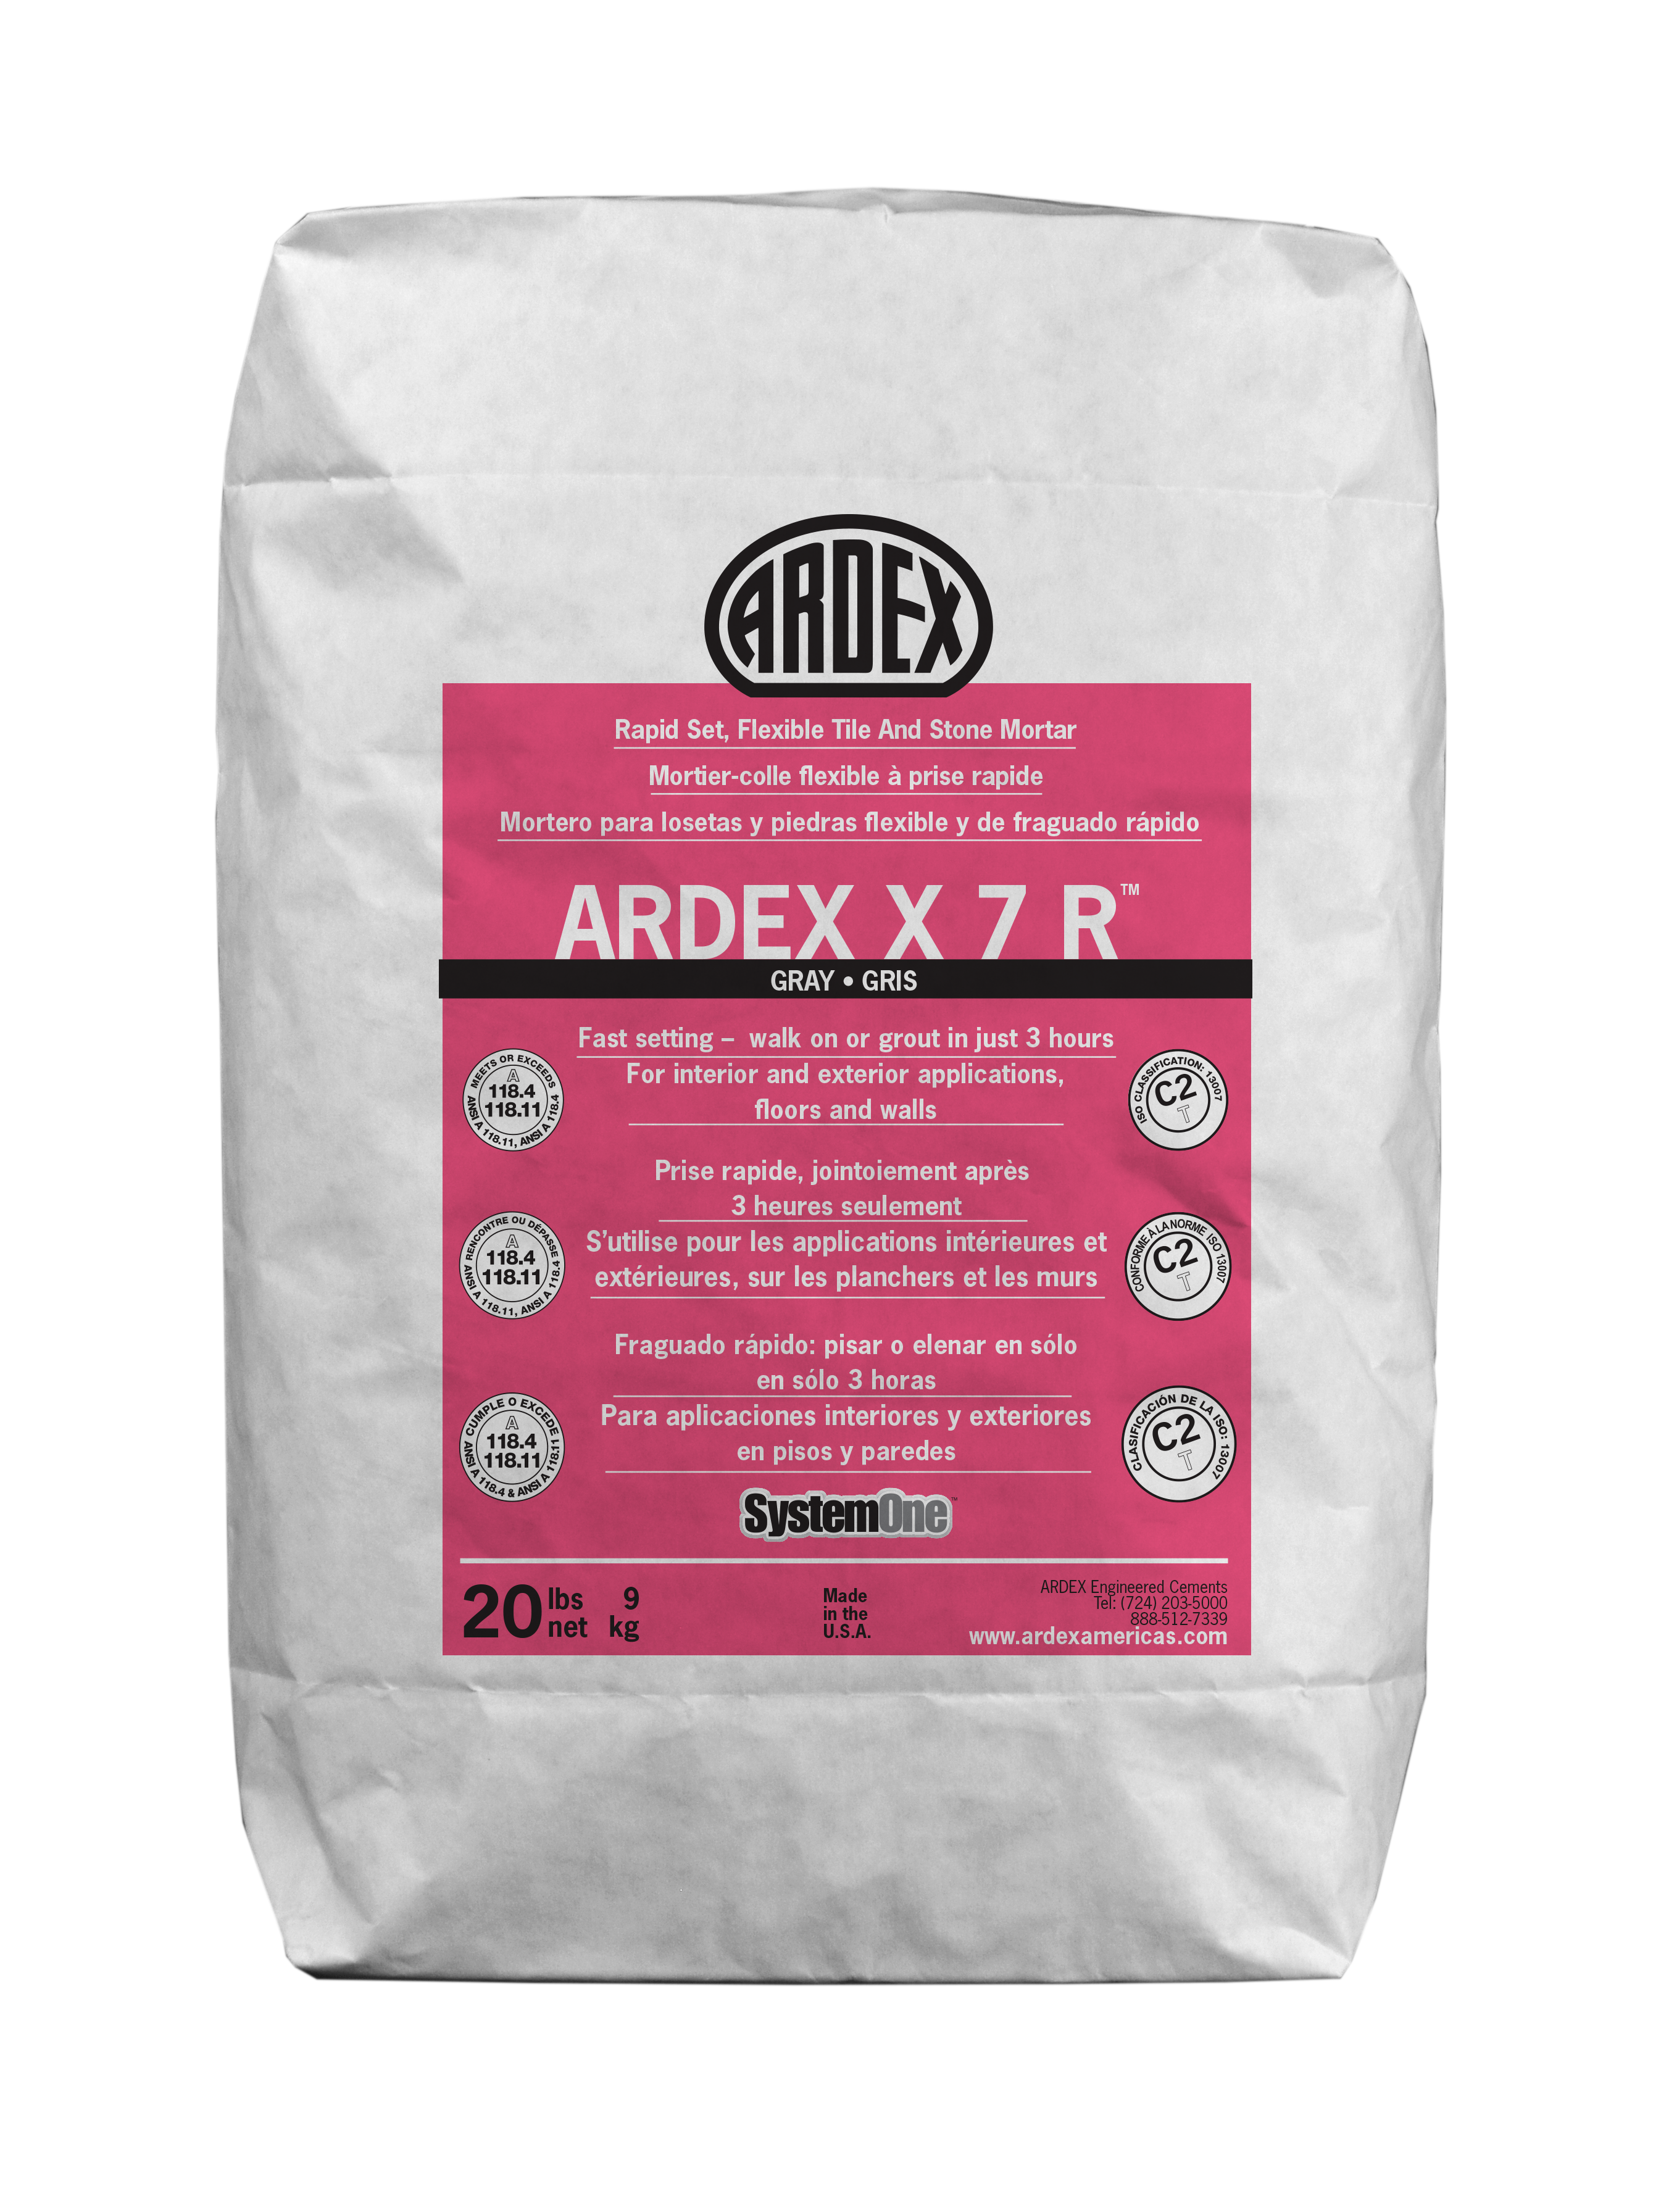 Ardex Rapid Set, Flexible Tile and Stone Mortar- X 7 R™ - Lint Tile